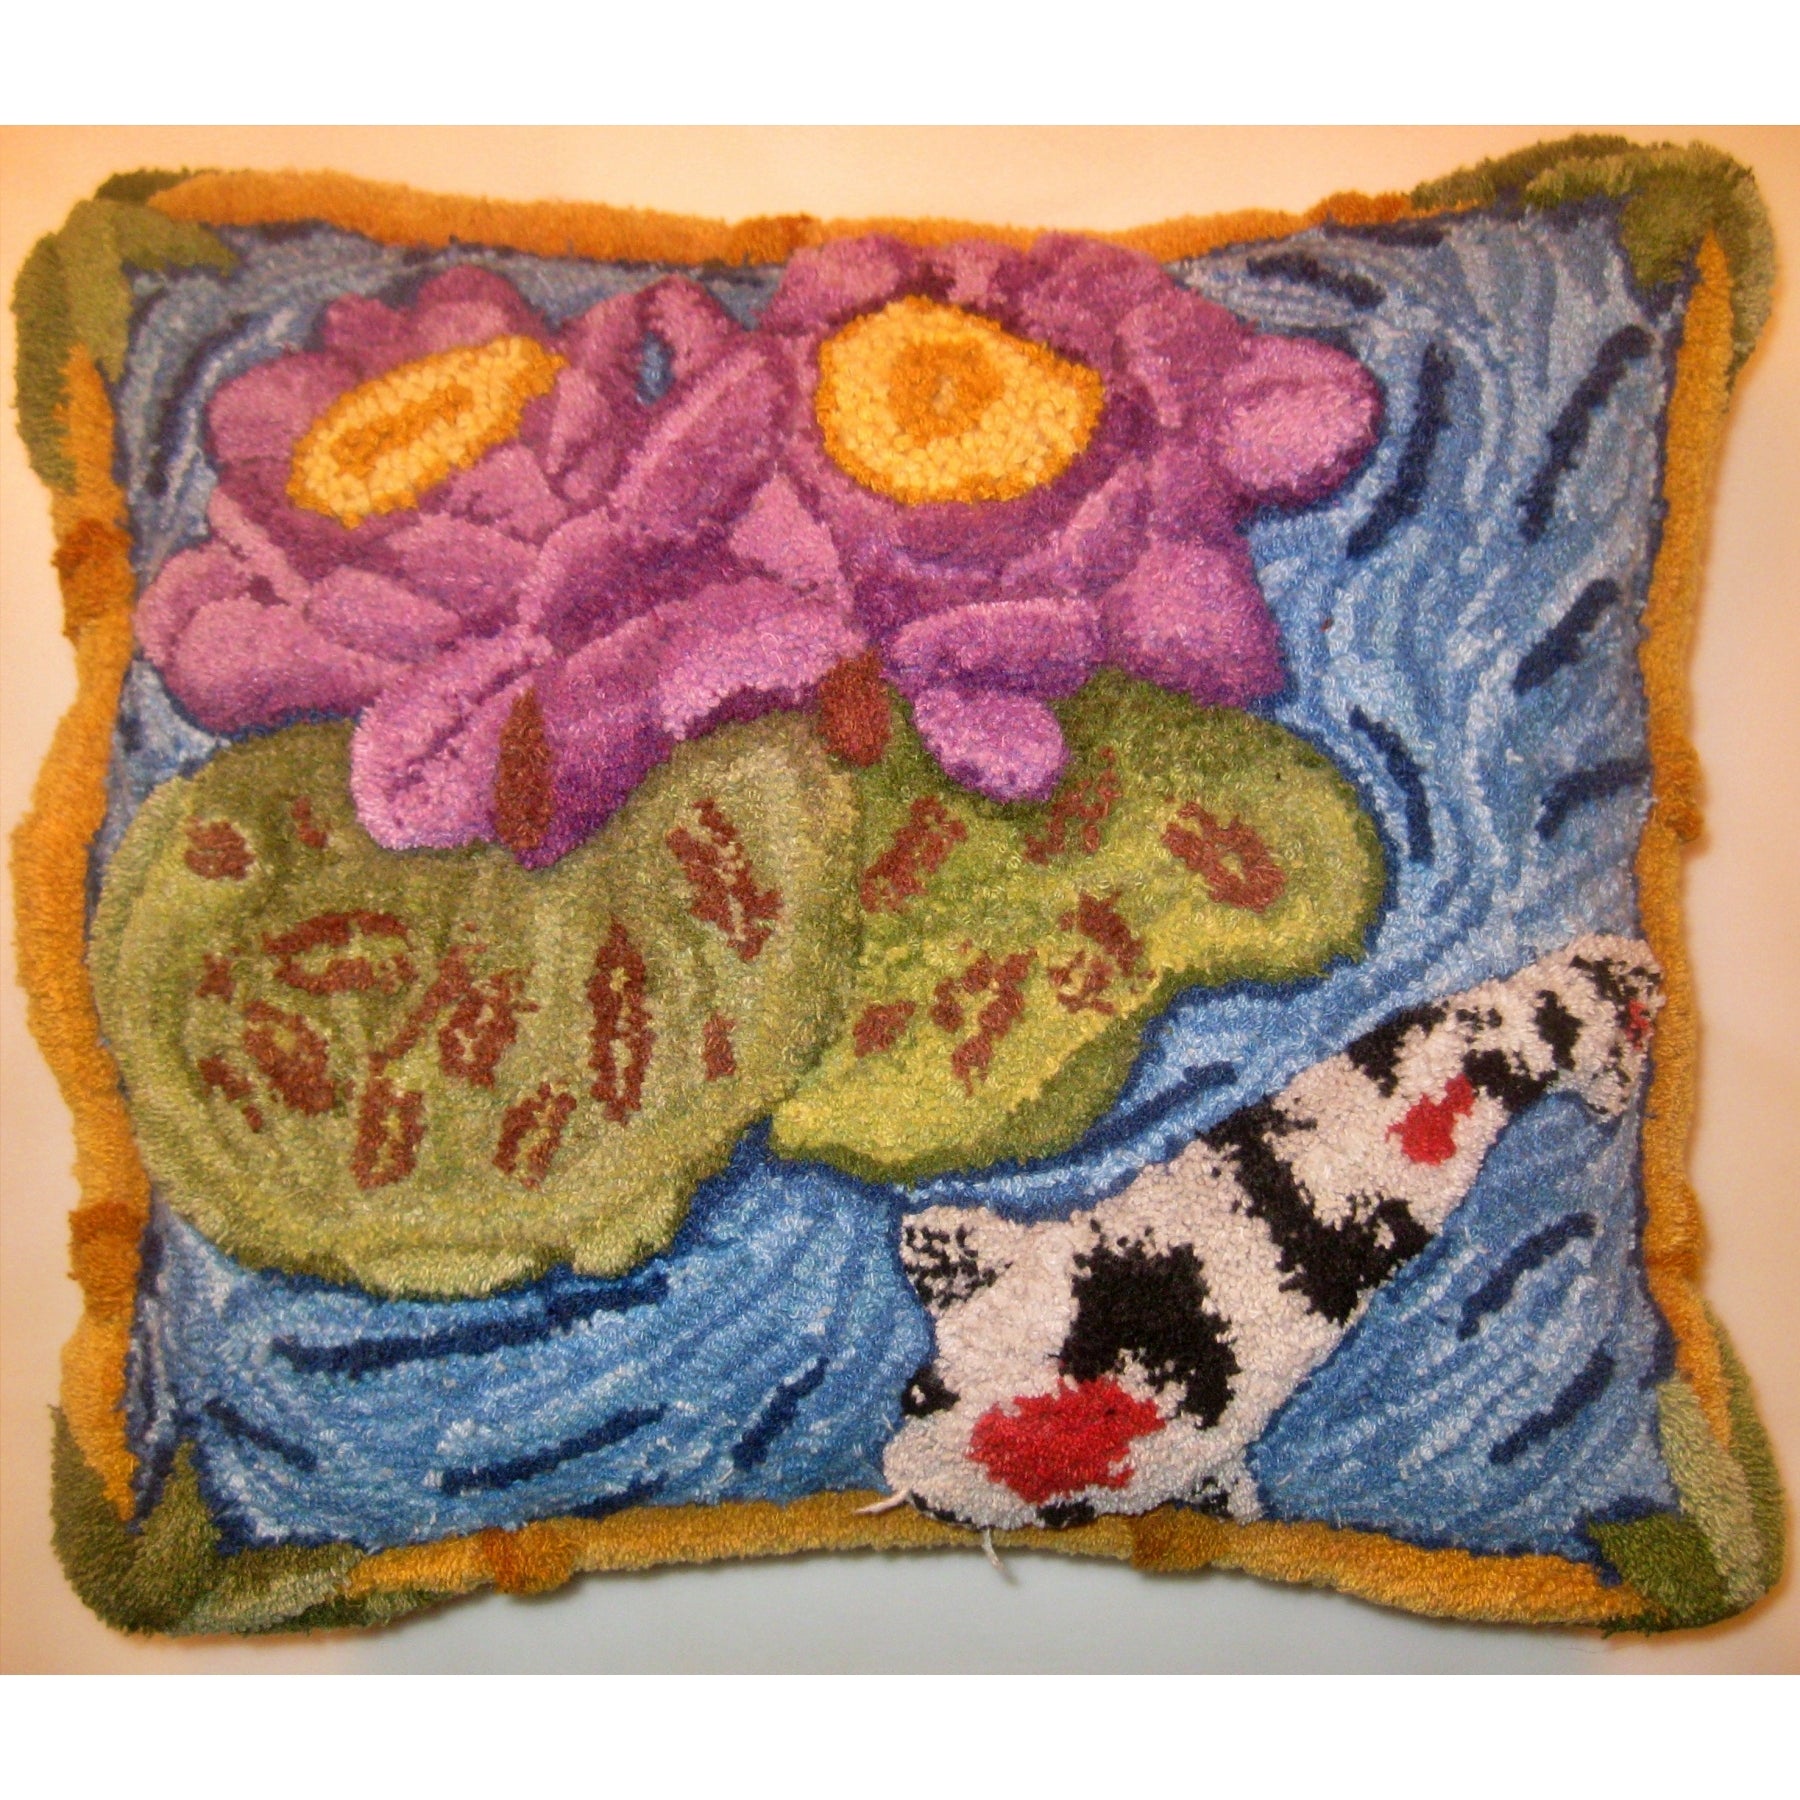 Lilies and Koi, rug hooked by John Leonard